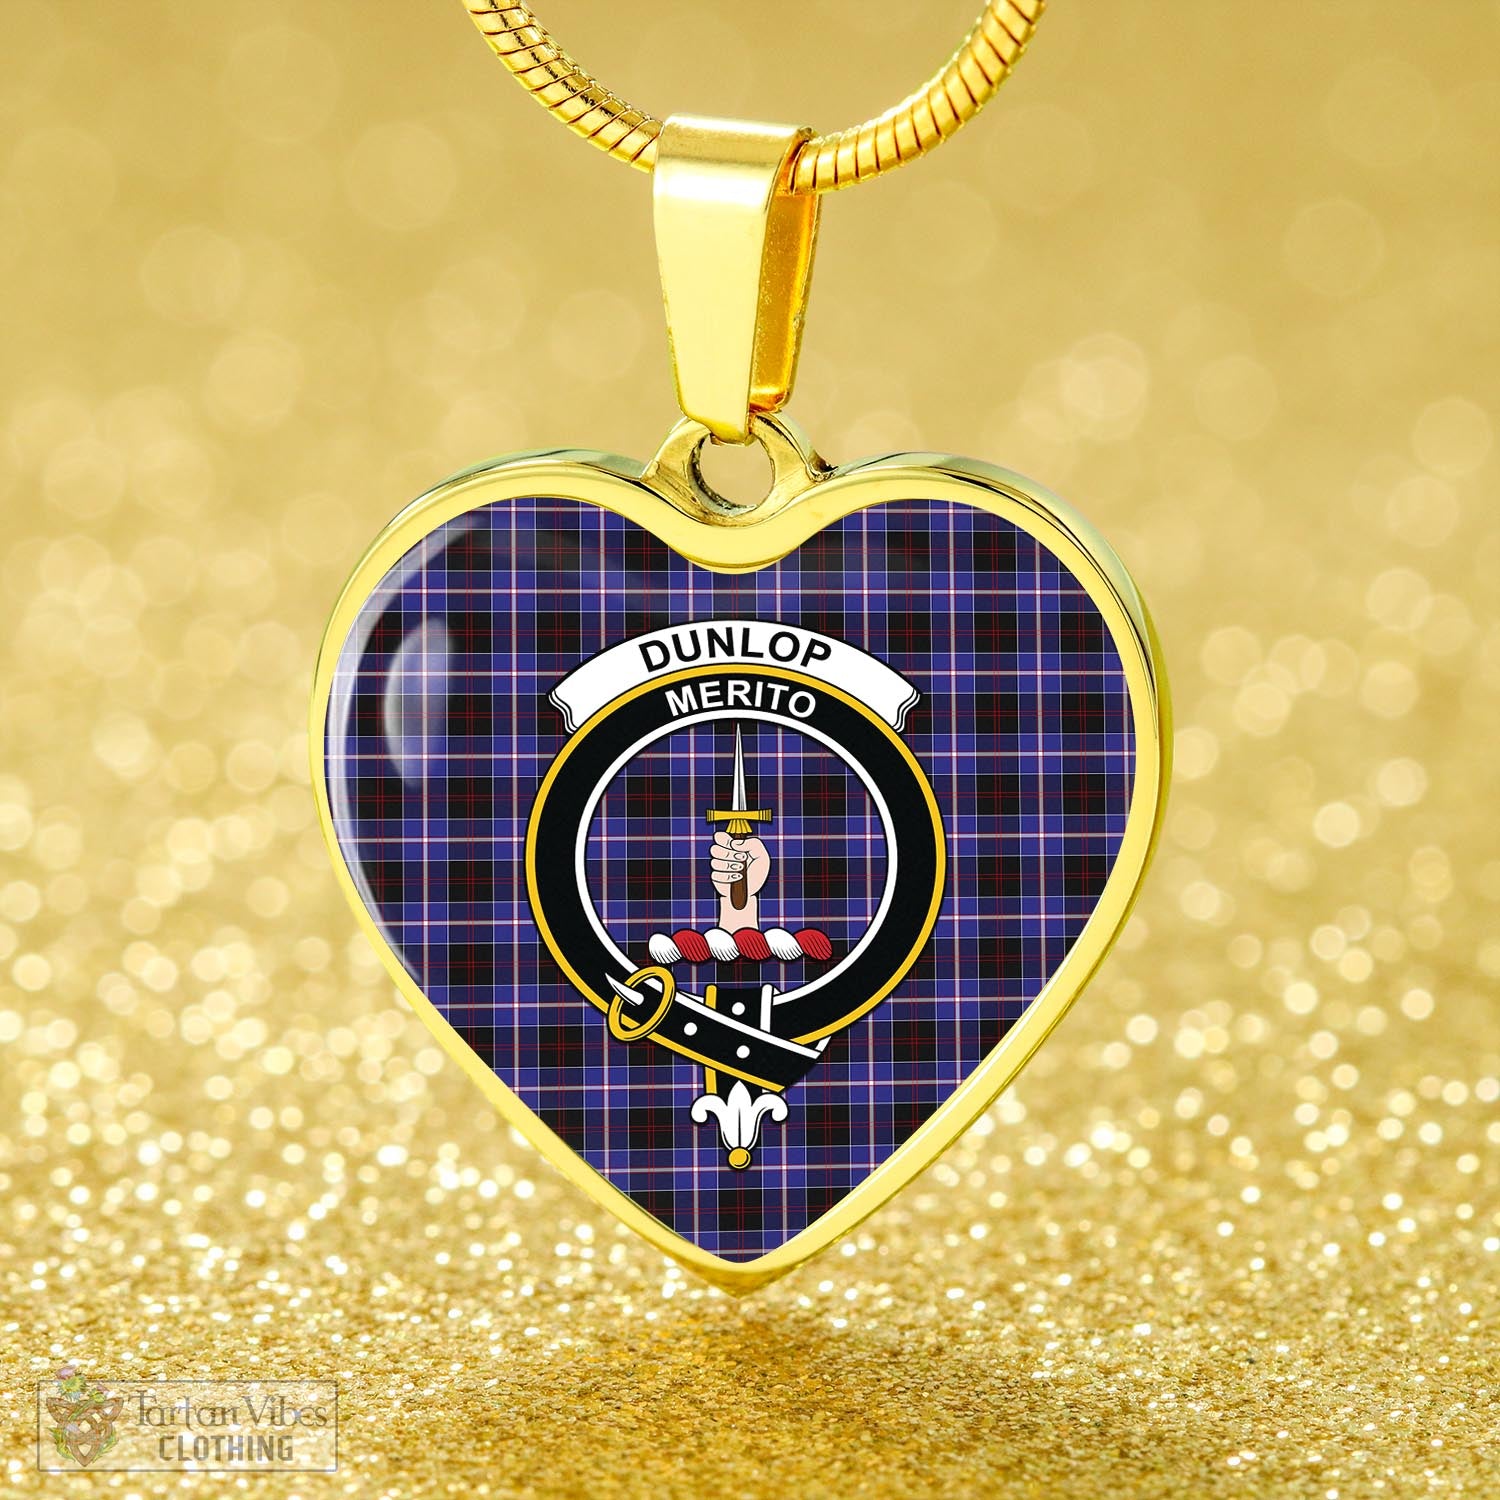 Tartan Vibes Clothing Dunlop Modern Tartan Heart Necklace with Family Crest